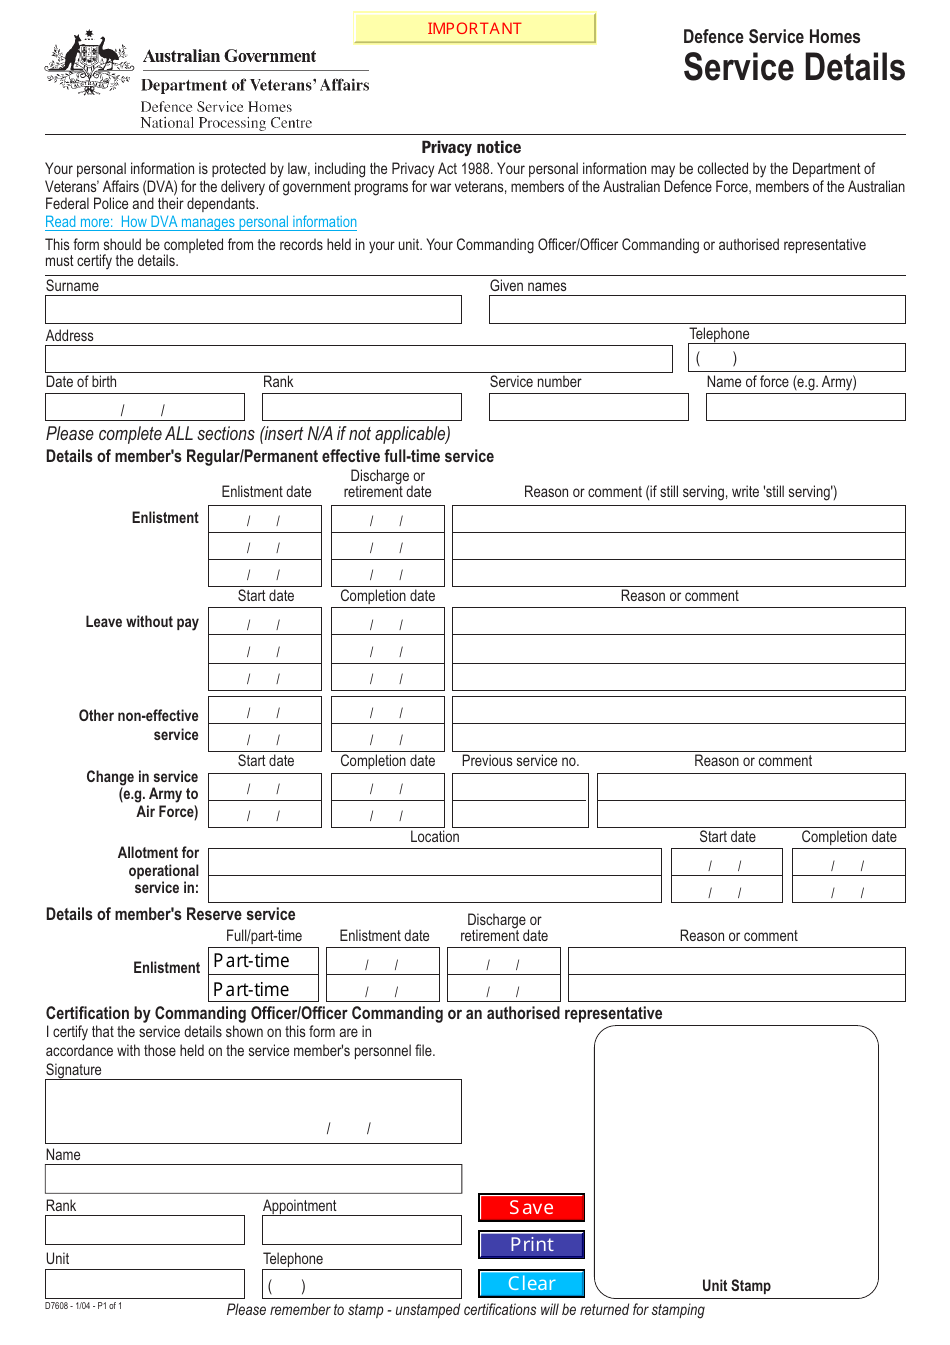 Form D7608 Defence Service Homes Service Details - Australia, Page 1